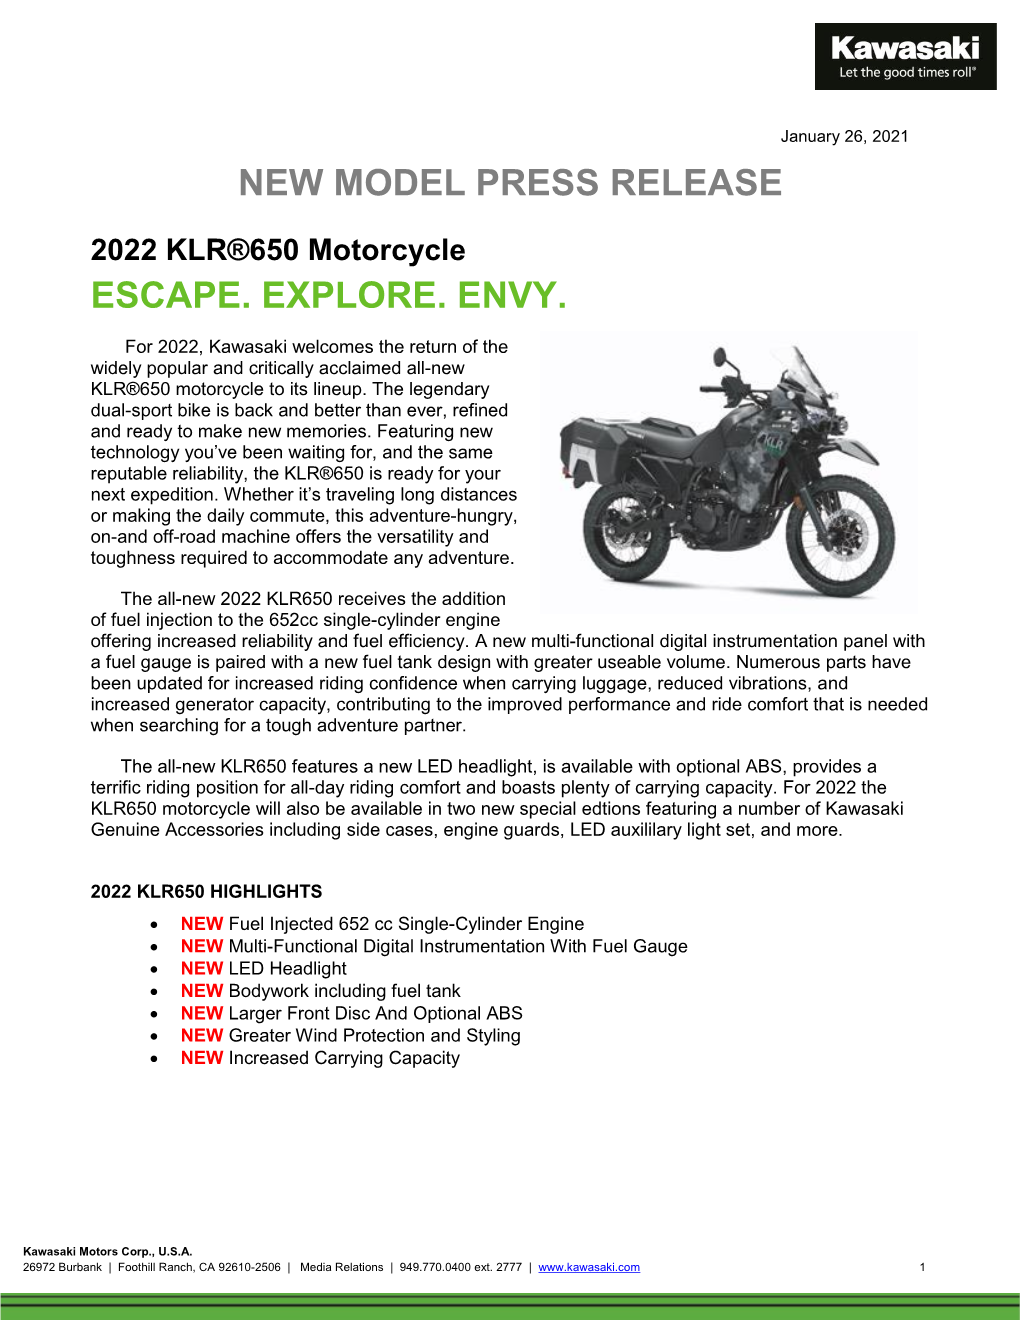 New Model Press Release Escape. Explore. Envy